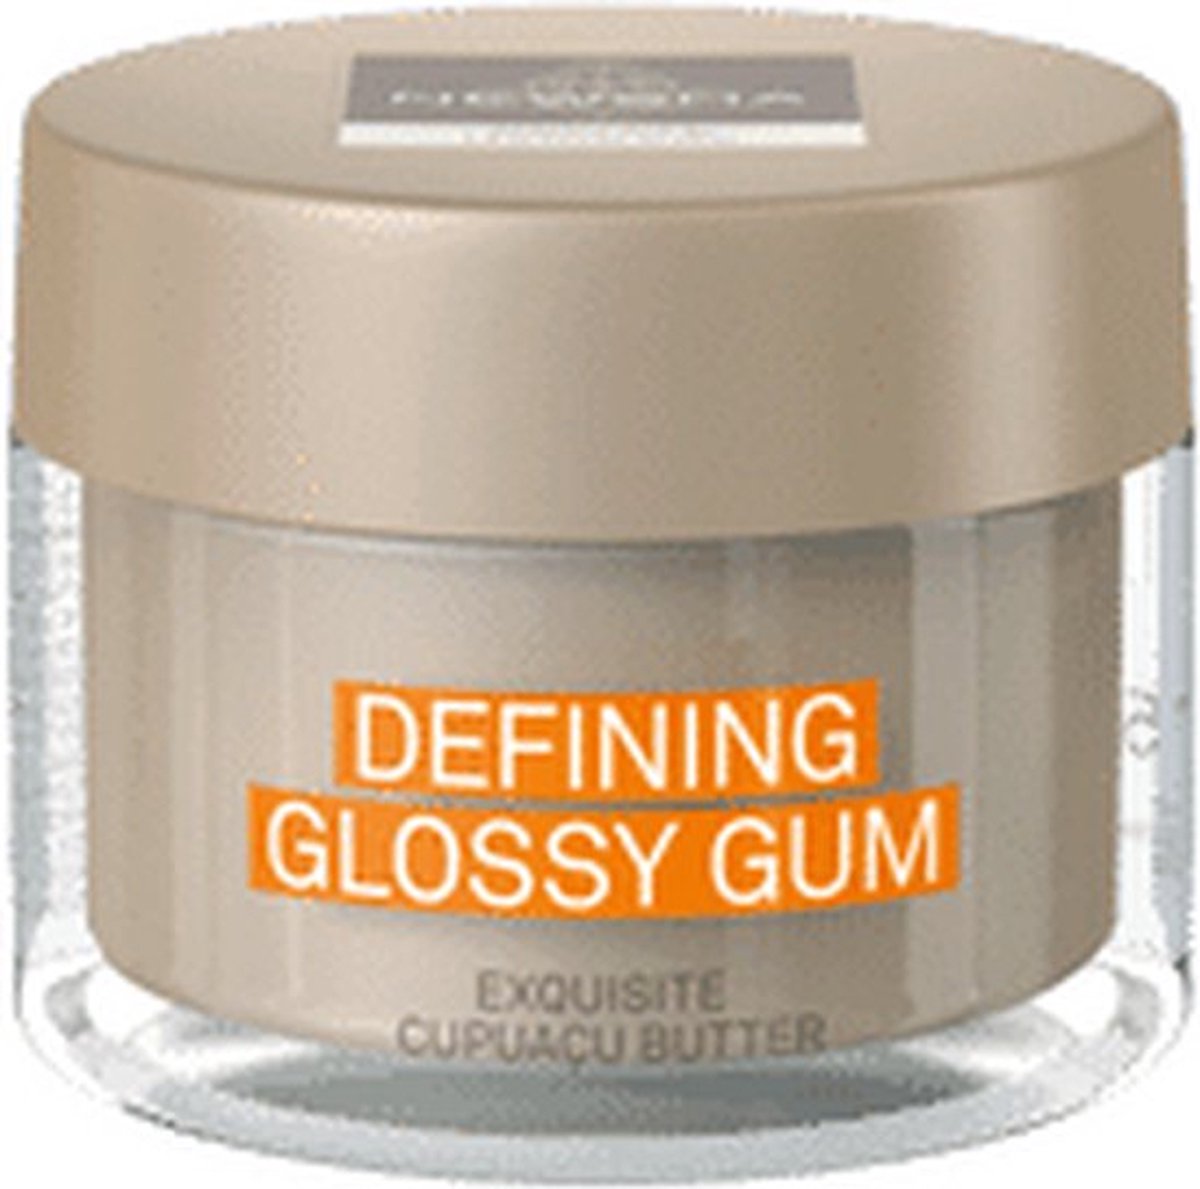 Newsha Defining Glossy Gum